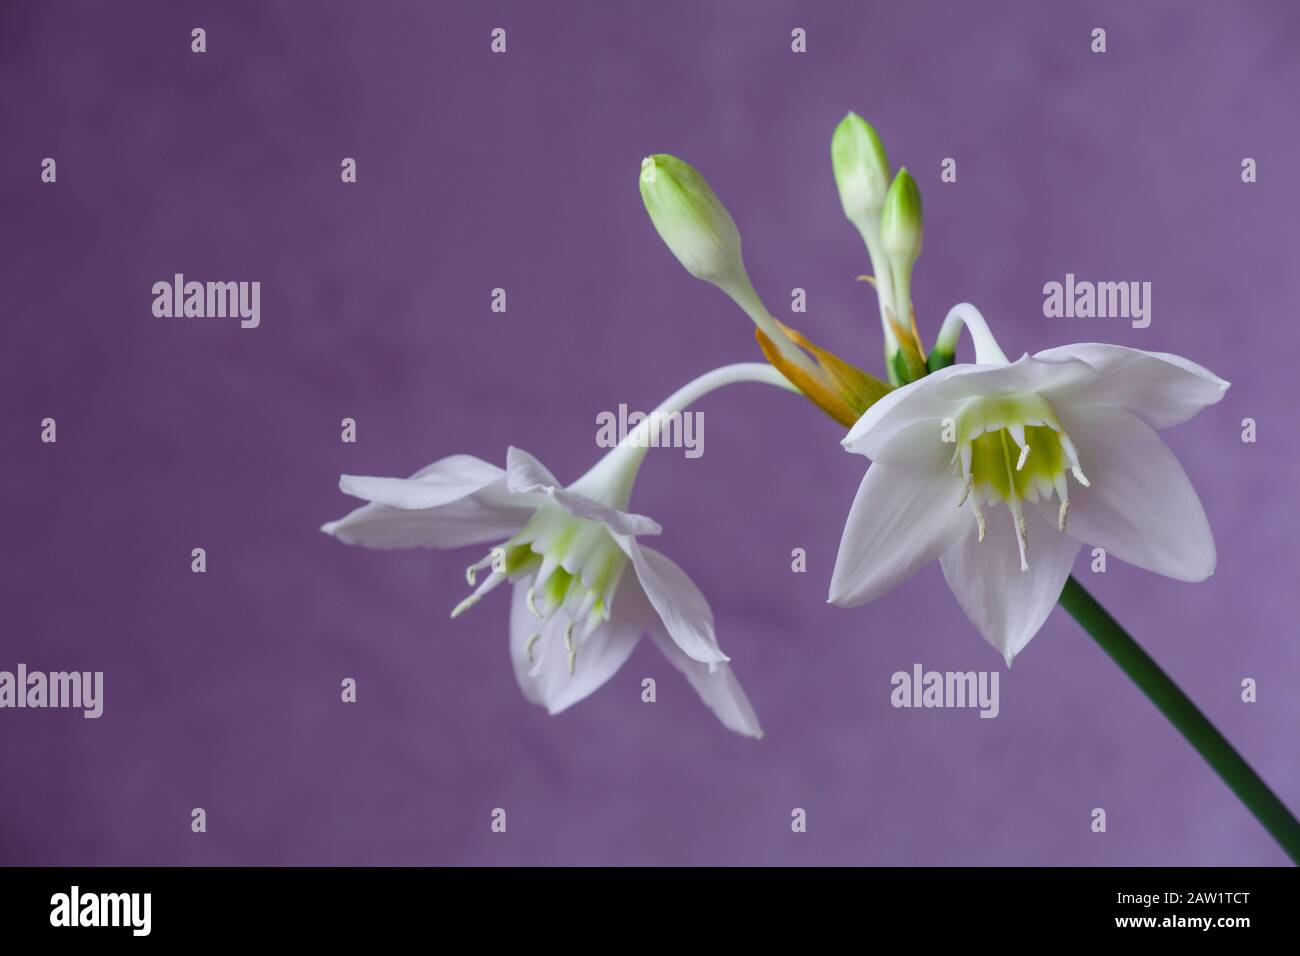 Beautiful Eucharis, the English name Amazon lily, flower close up against purple background Stock Photo